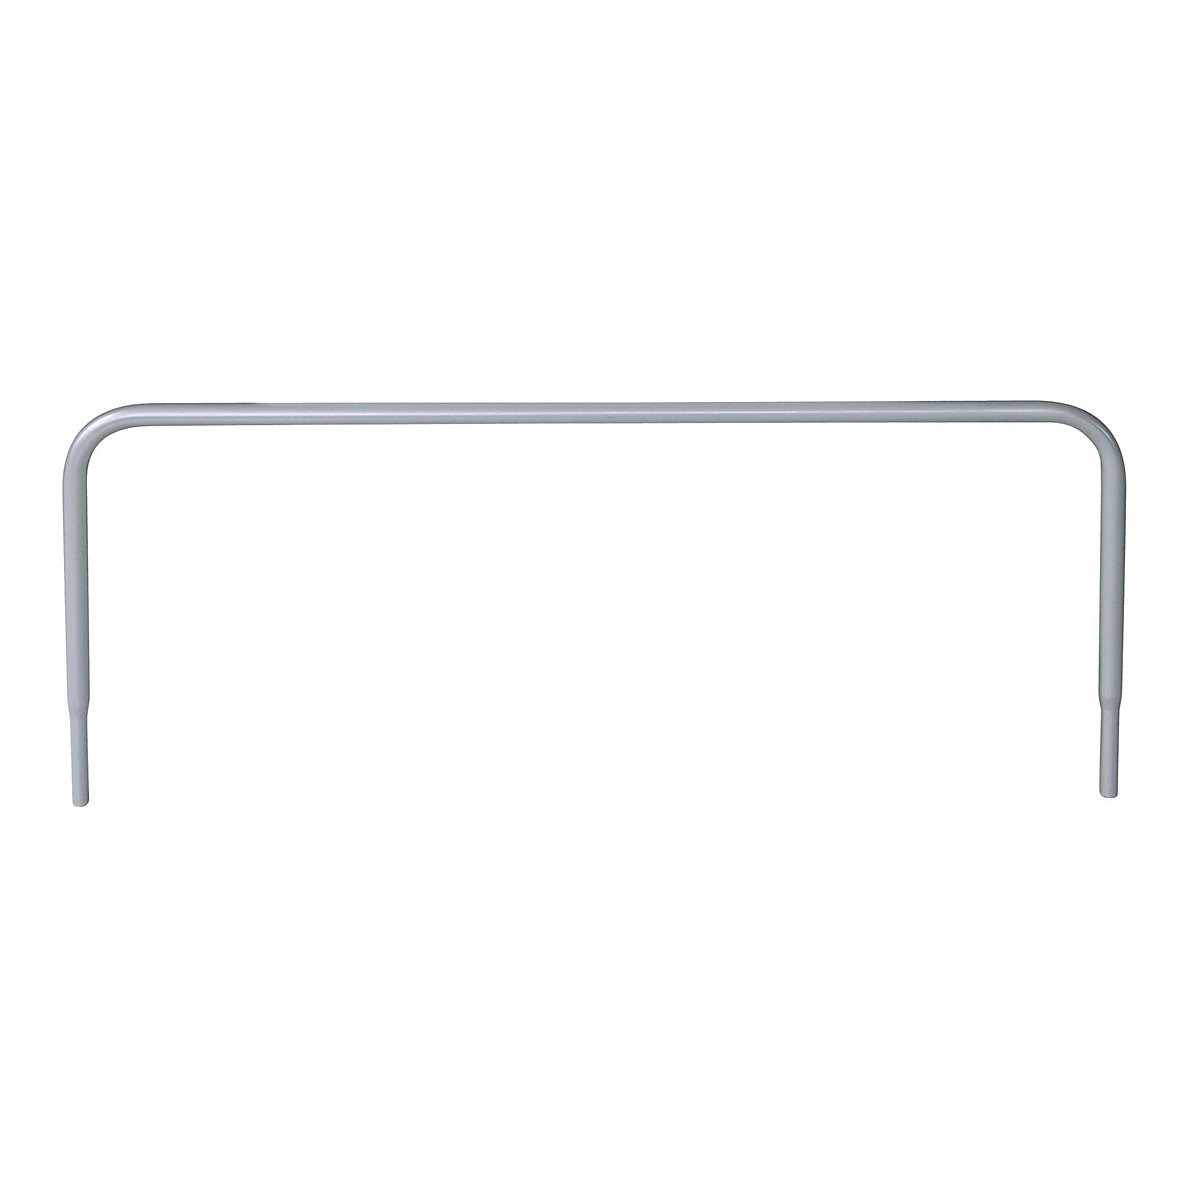 Shelf divider for C-rails - SCHULTE